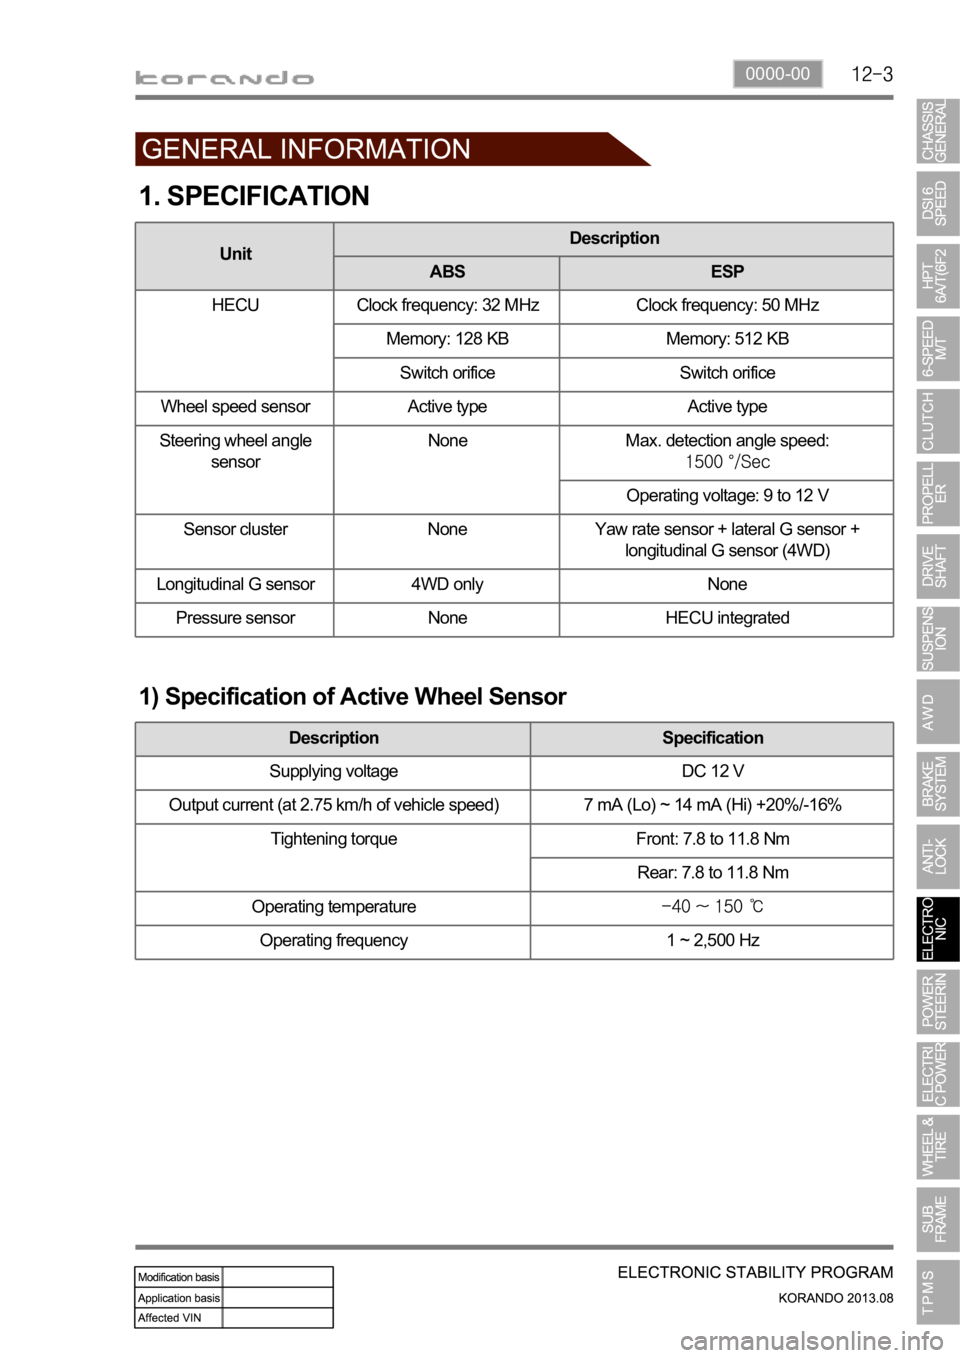 SSANGYONG KORANDO 2013 Workshop Manual 0000-00
1. SPECIFICATION
1) Specification of Active Wheel Sensor
Description Specification
Supplying voltage DC 12 V
Output current (at 2.75 km/h of vehicle speed) 7 mA (Lo) ~ 14 mA (Hi) +20%/-16%
Tig